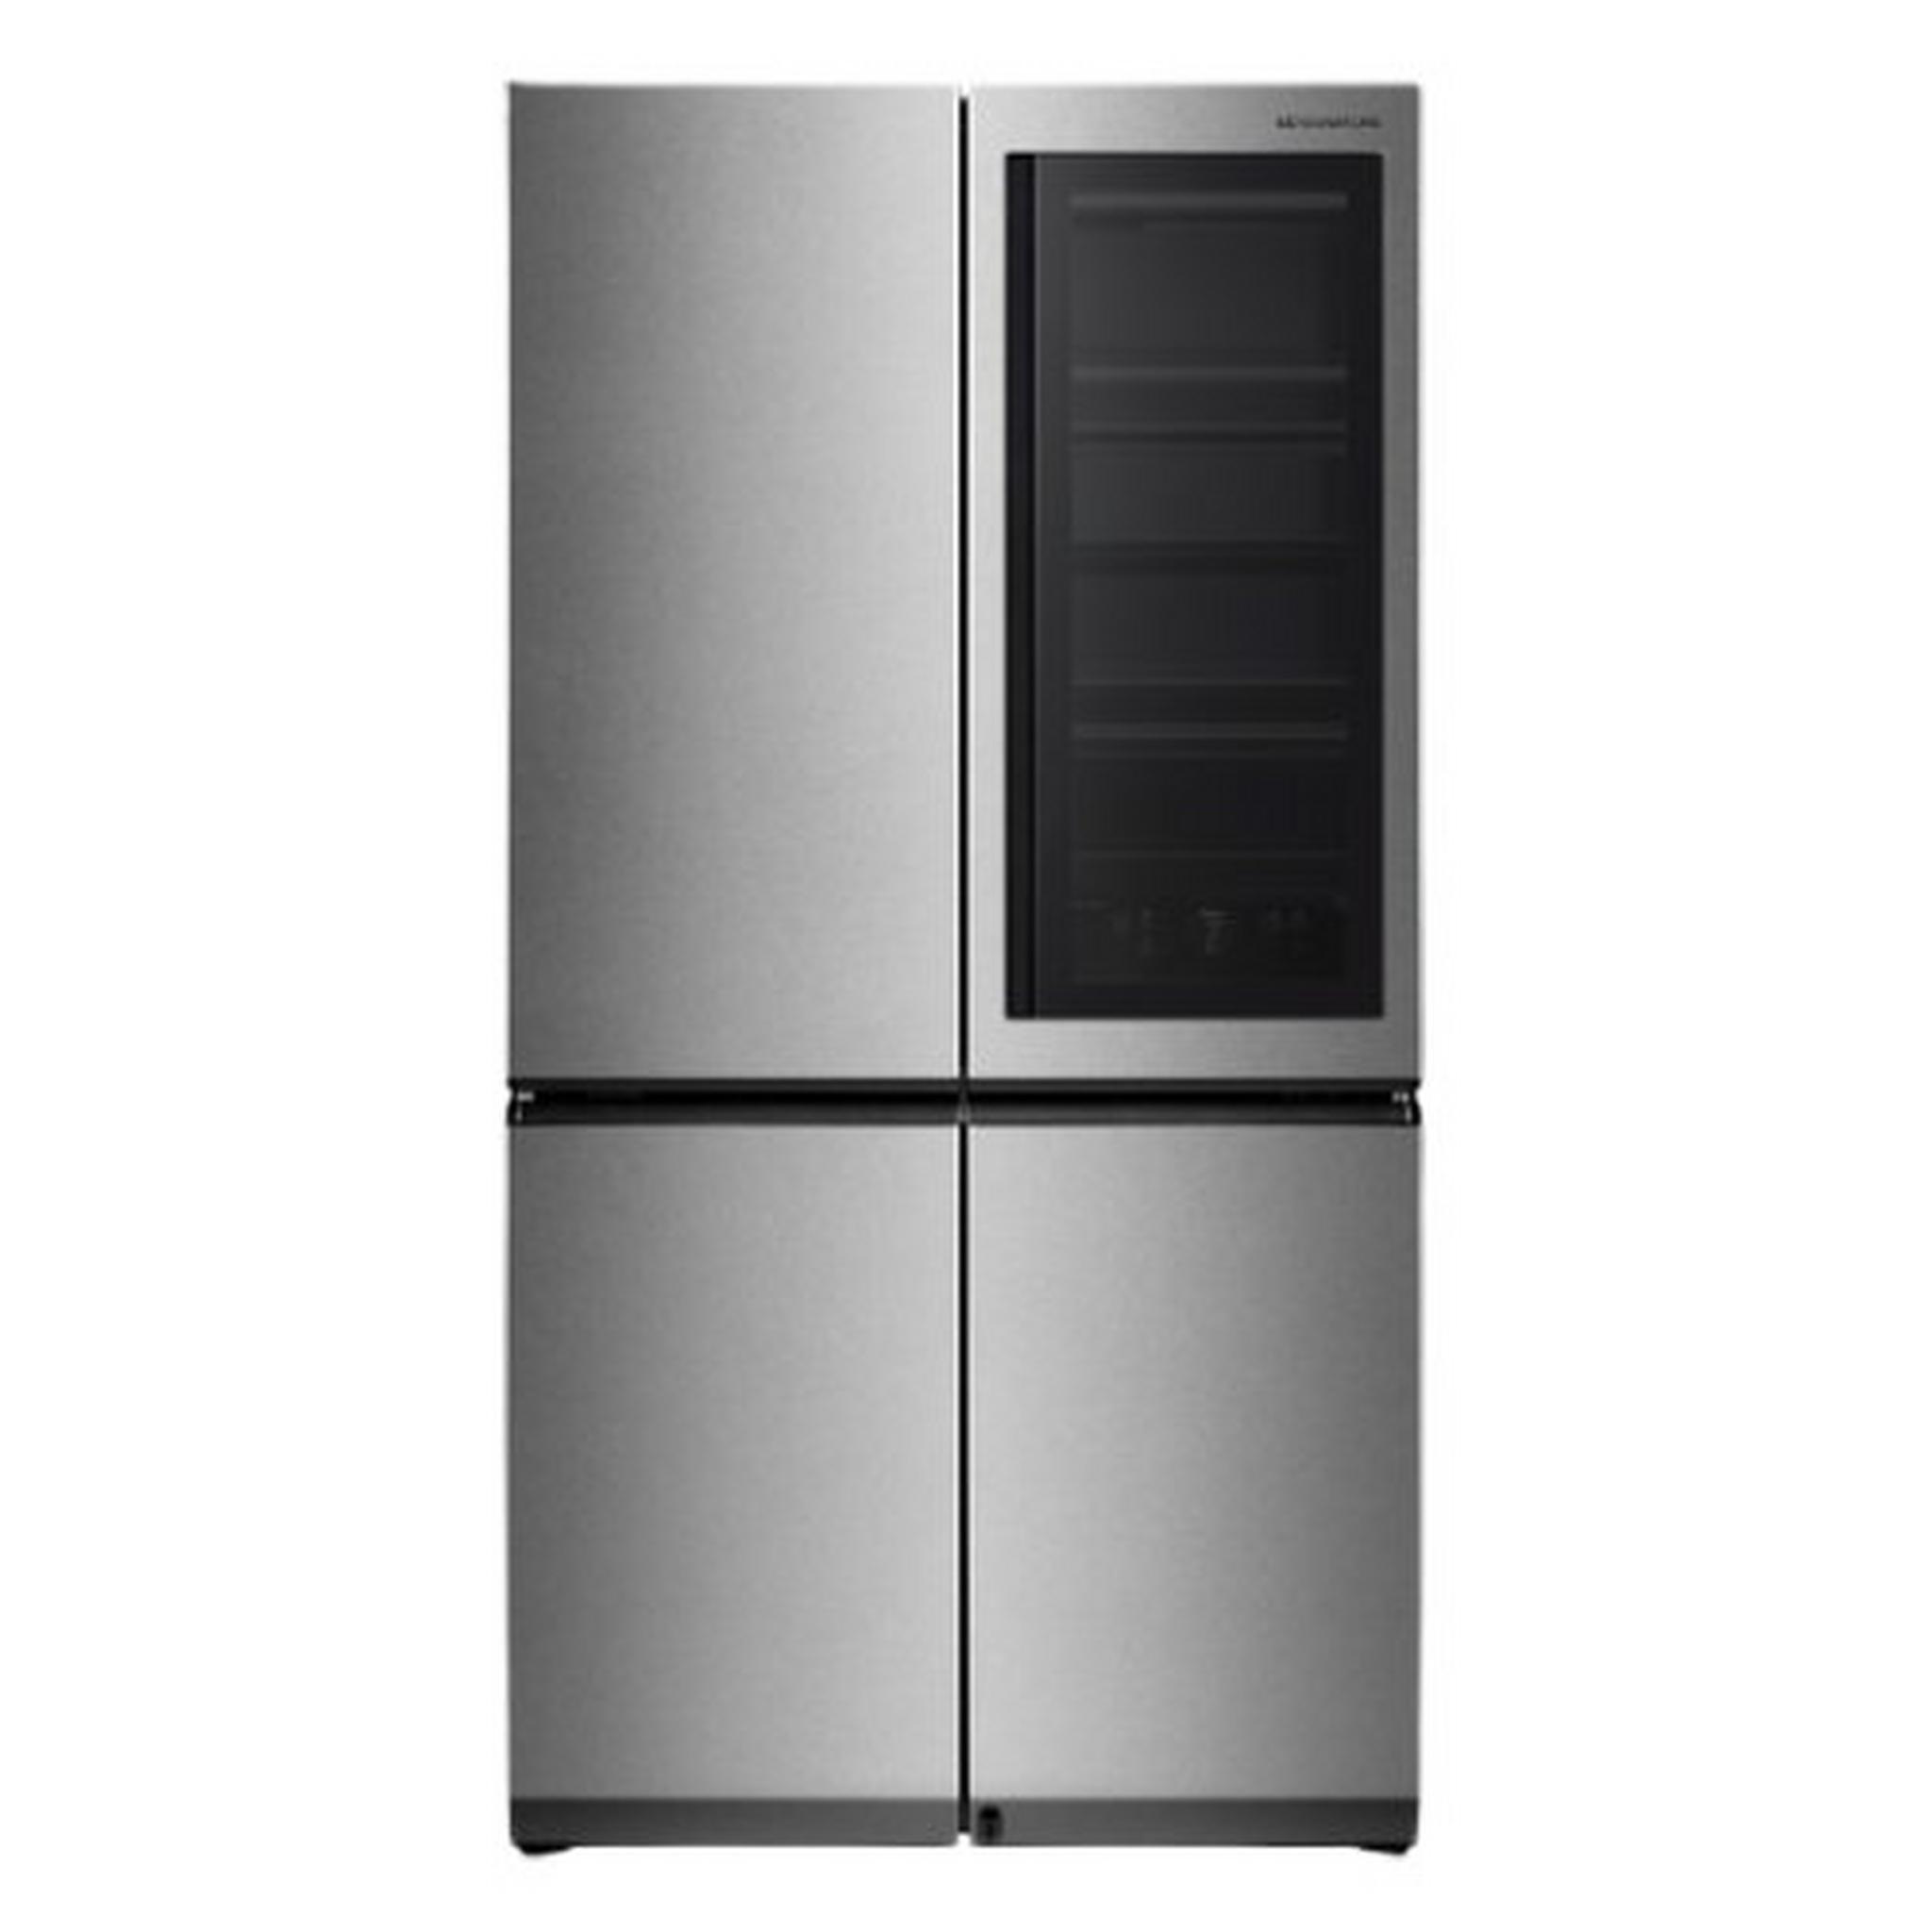 LG 28.4 CFT Side By Side Refrigerator (LMS344VBVL) - Stainless Steel